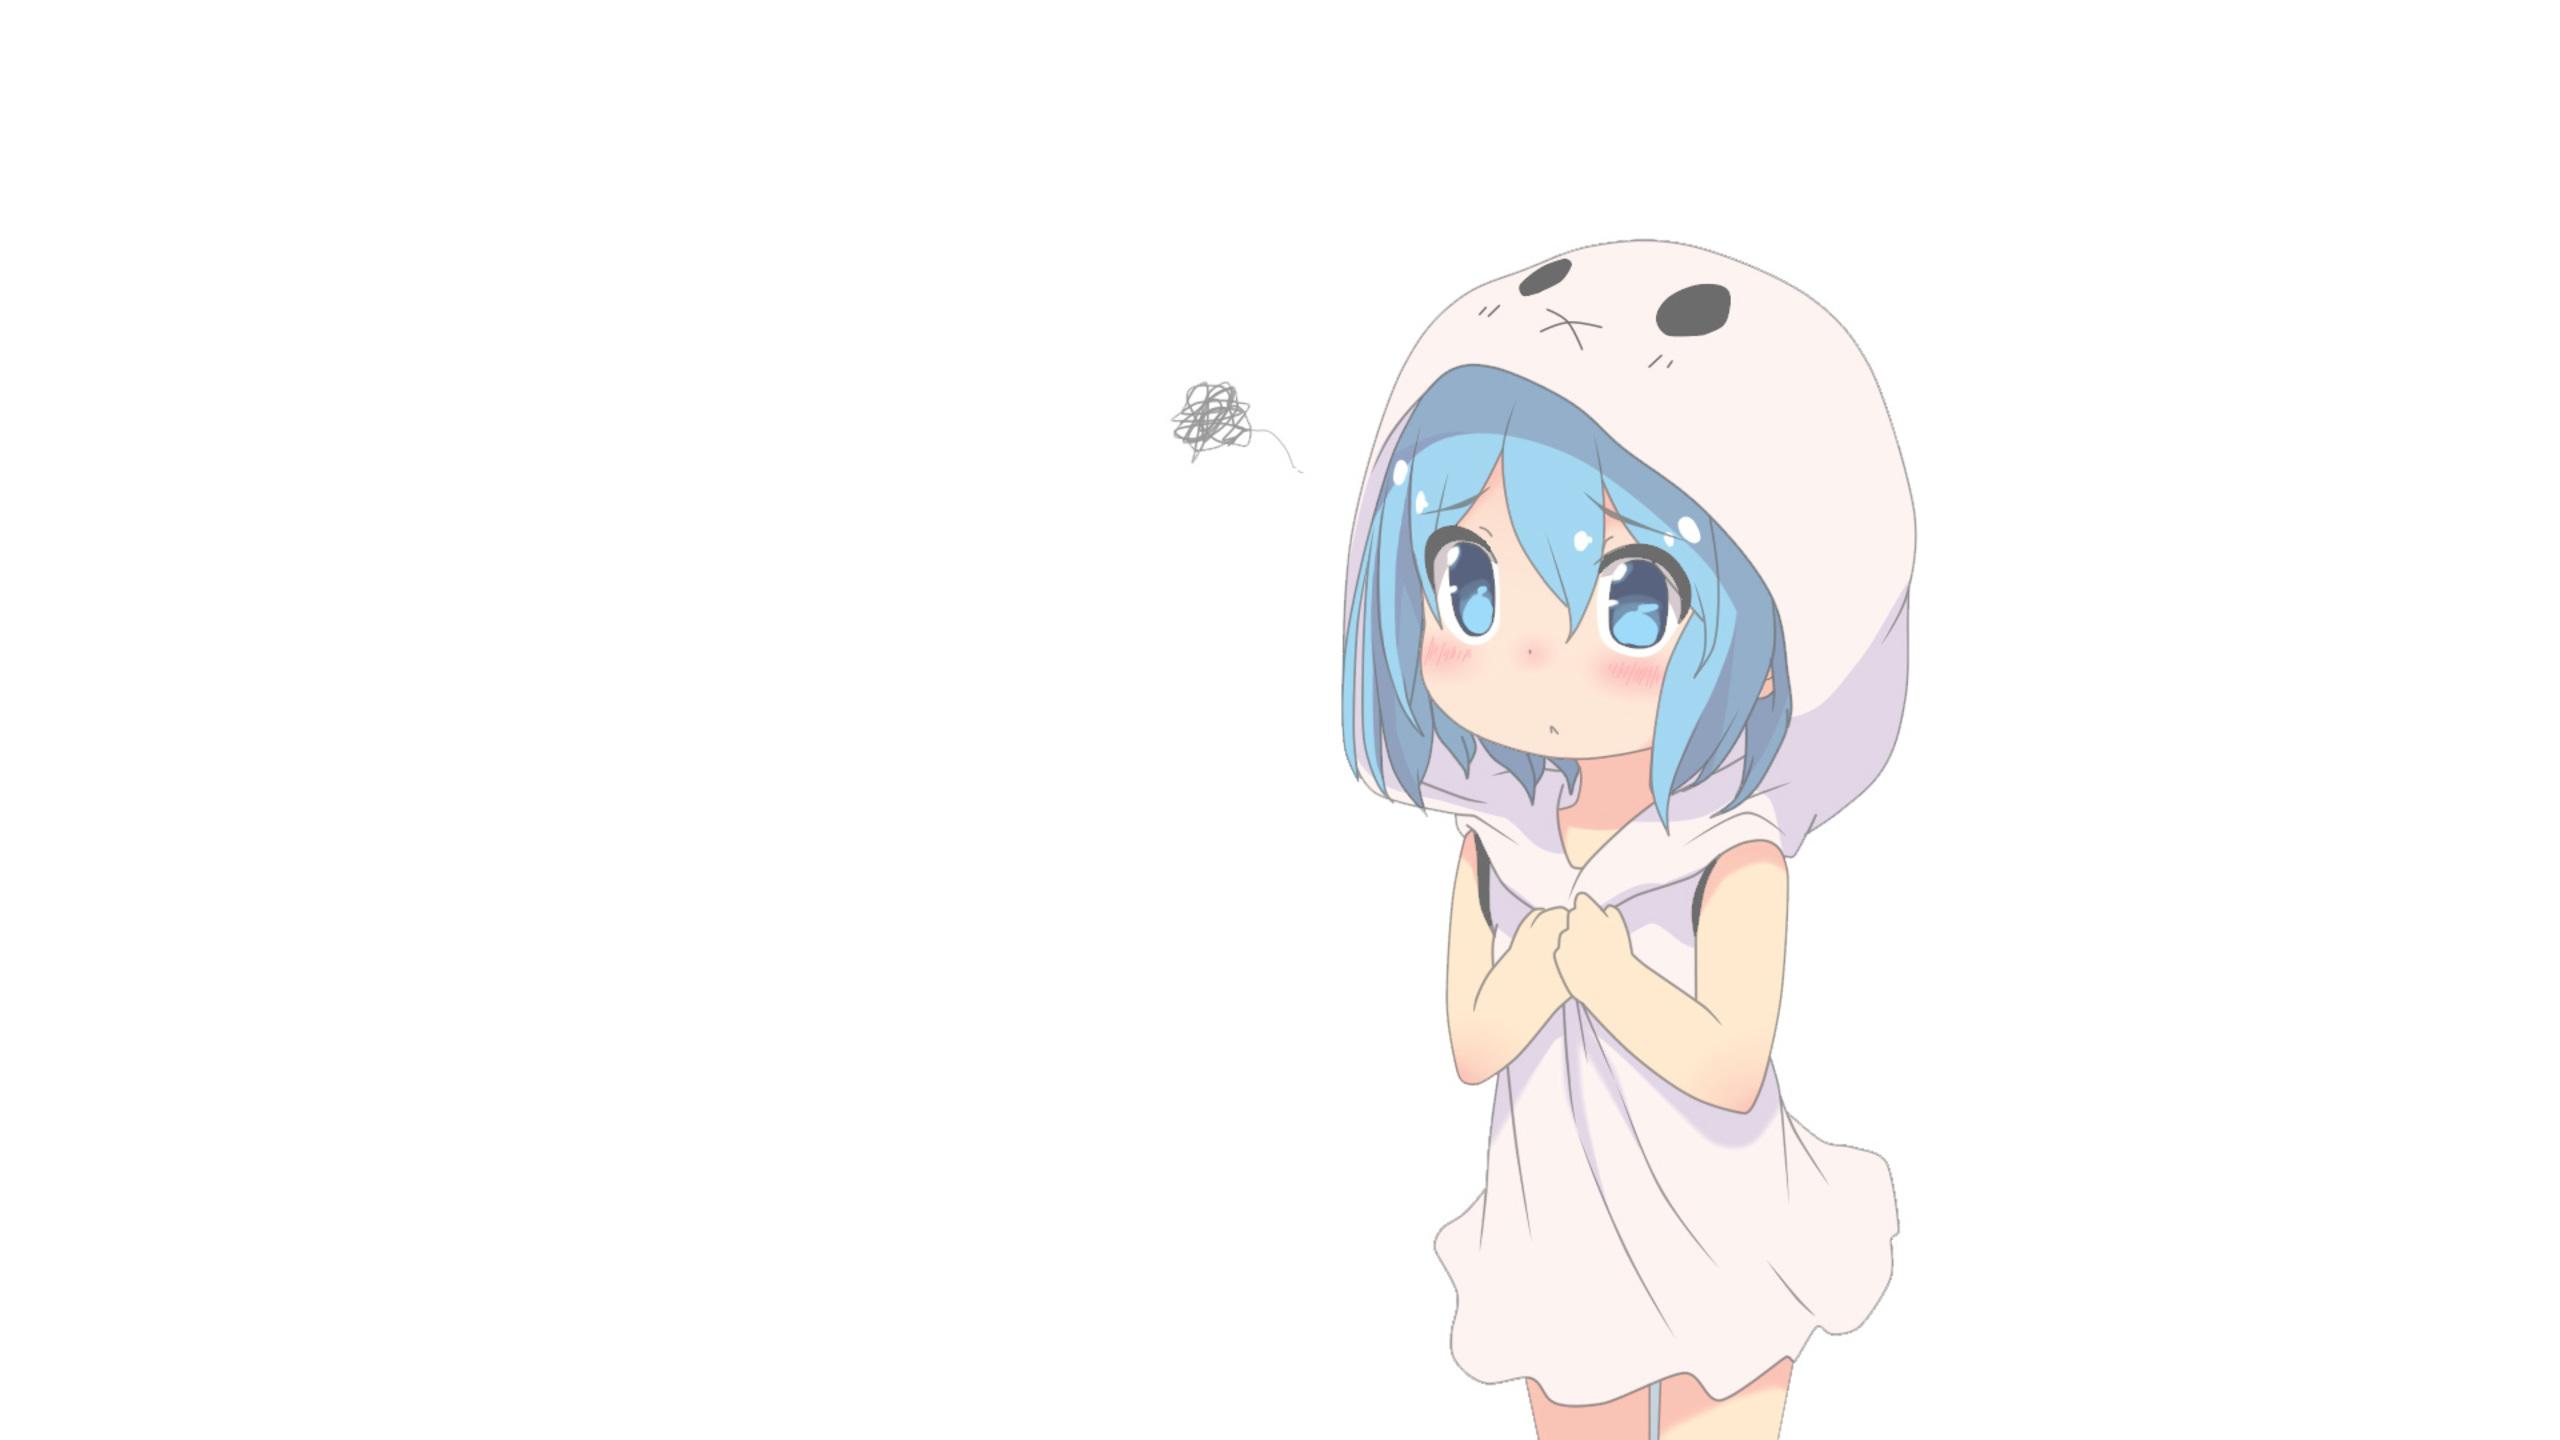 Cute Little anime Girl by Darkness8970 on DeviantArt